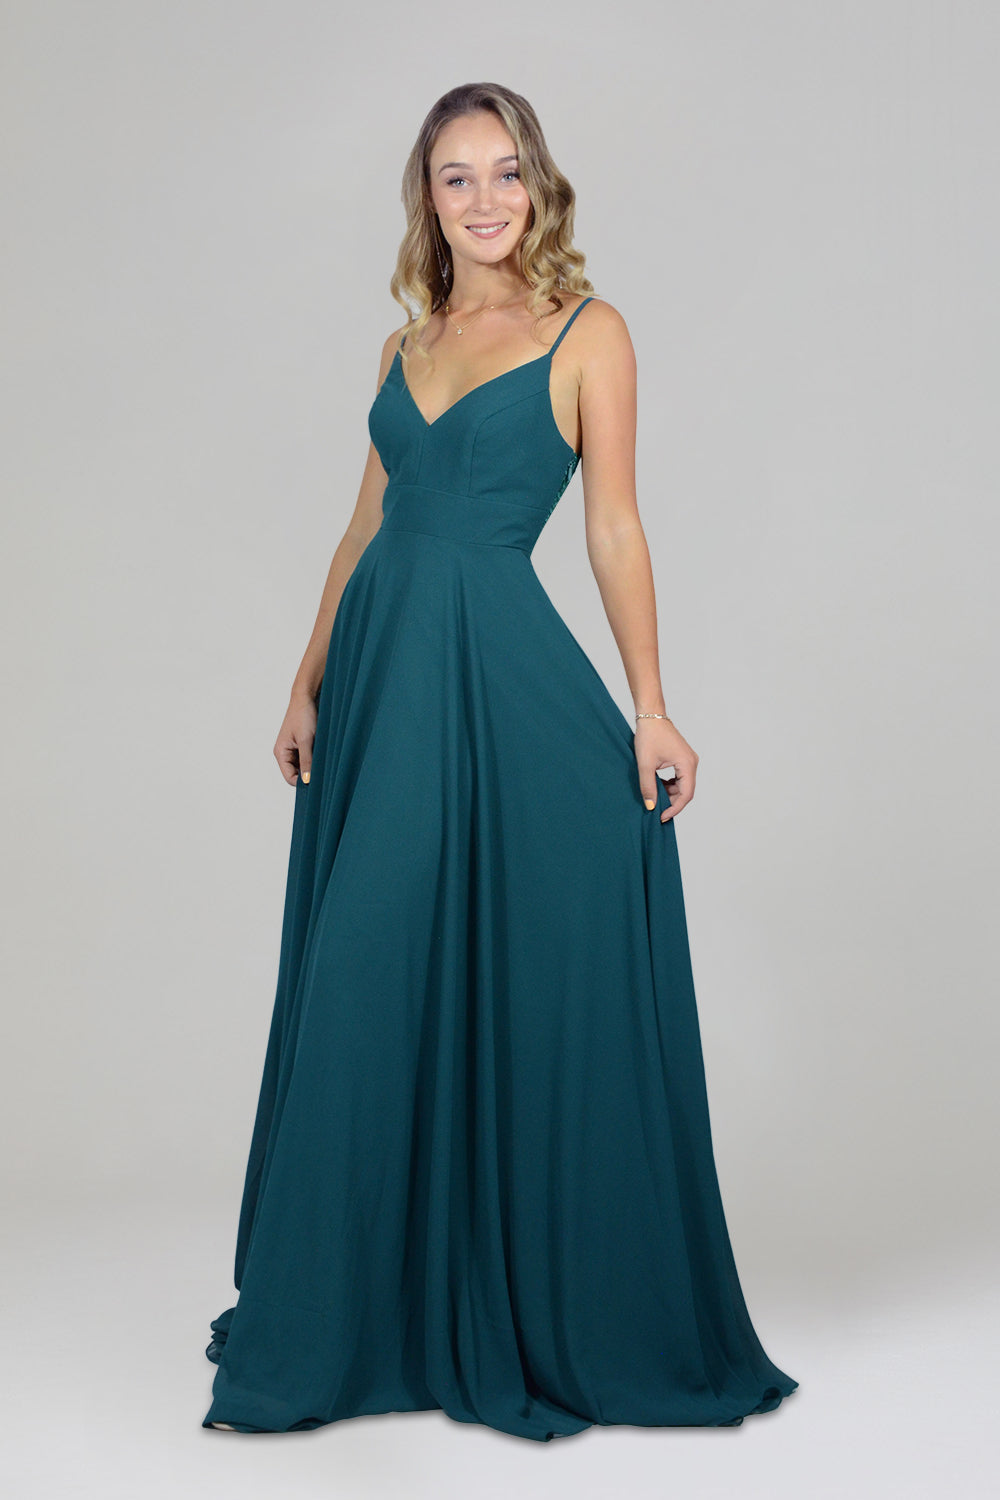 emerald bridesmad dresses perth custom made envious bridal & formal